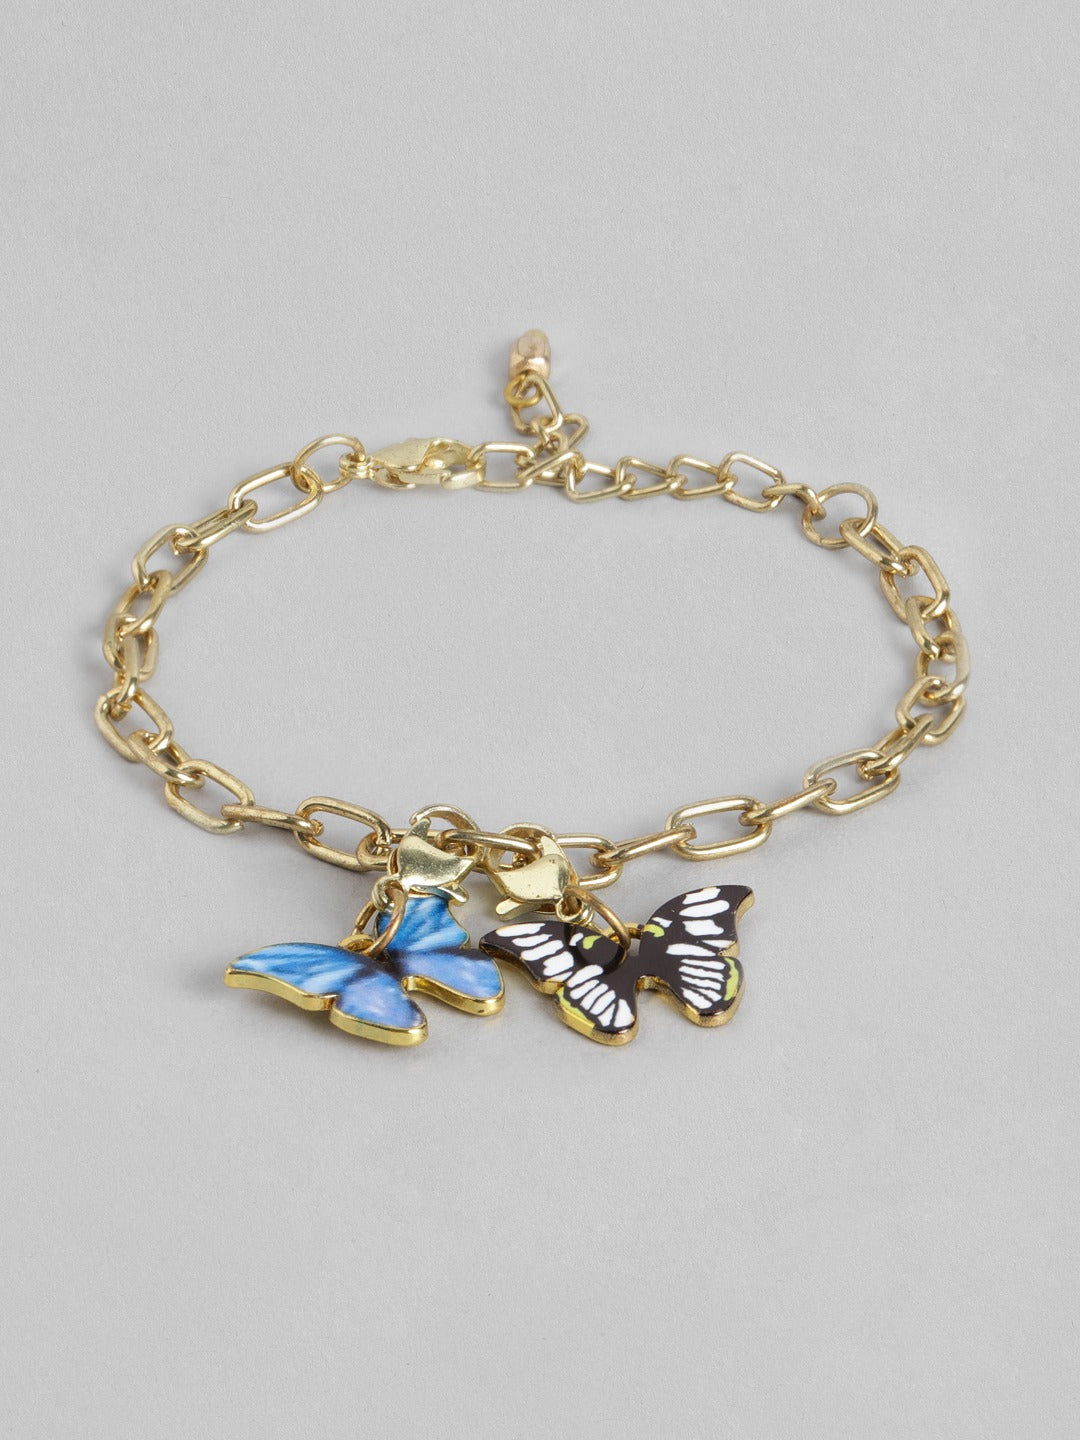 Blueberry butterfly pendant chain bracelet